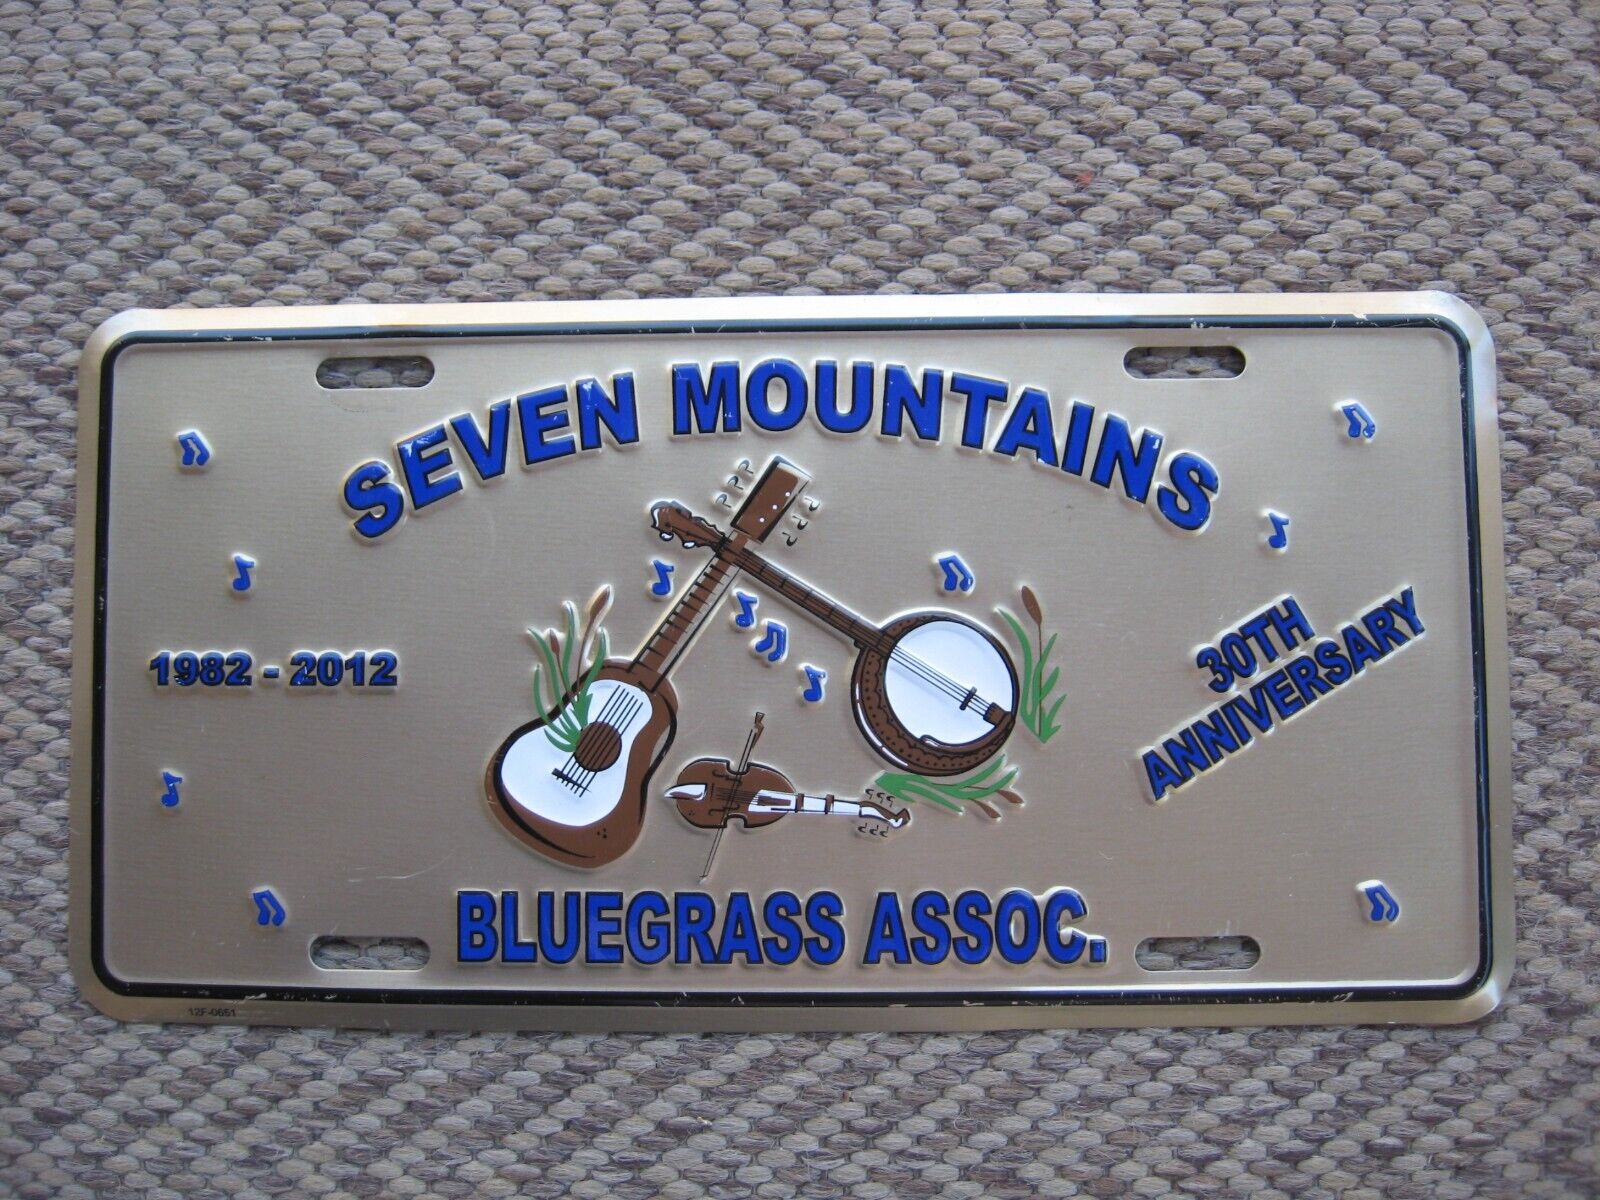 1982-2012 Seven Mountains Bluegrass Assoc. 30th Anniv. license plate